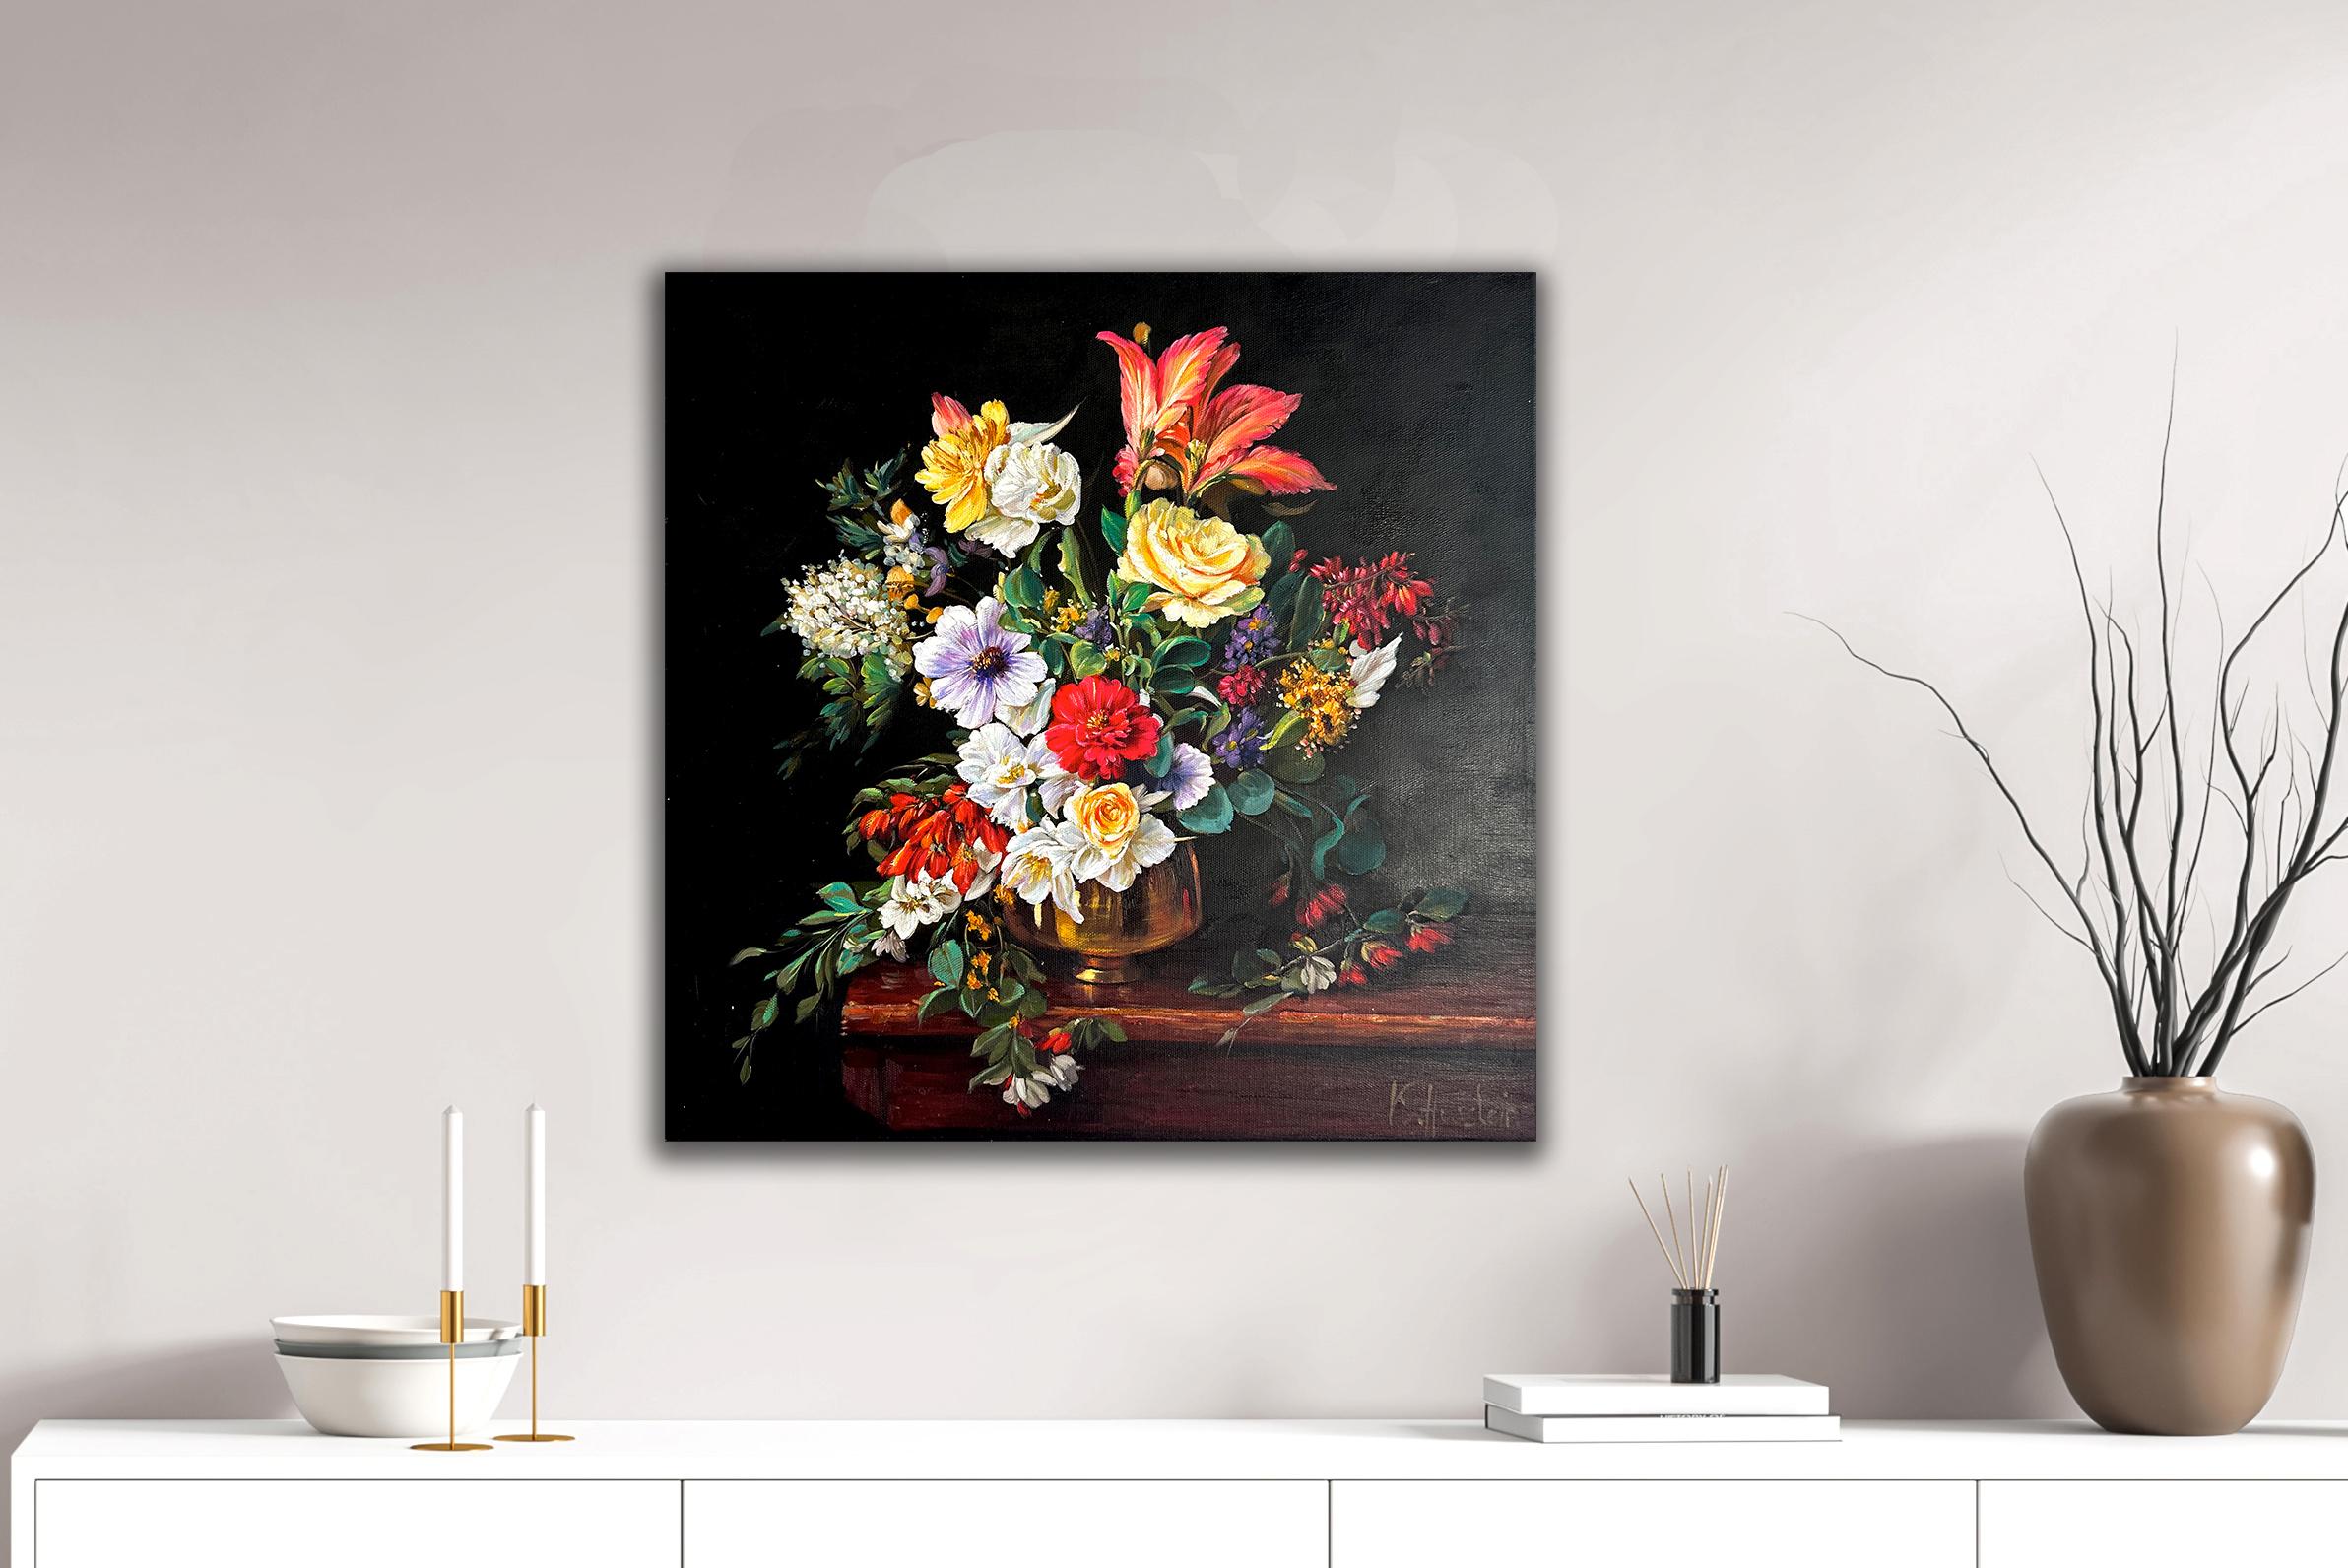 Heart over Head - Katharina Husslein Contemporary Flower Still life Oil Painting 2